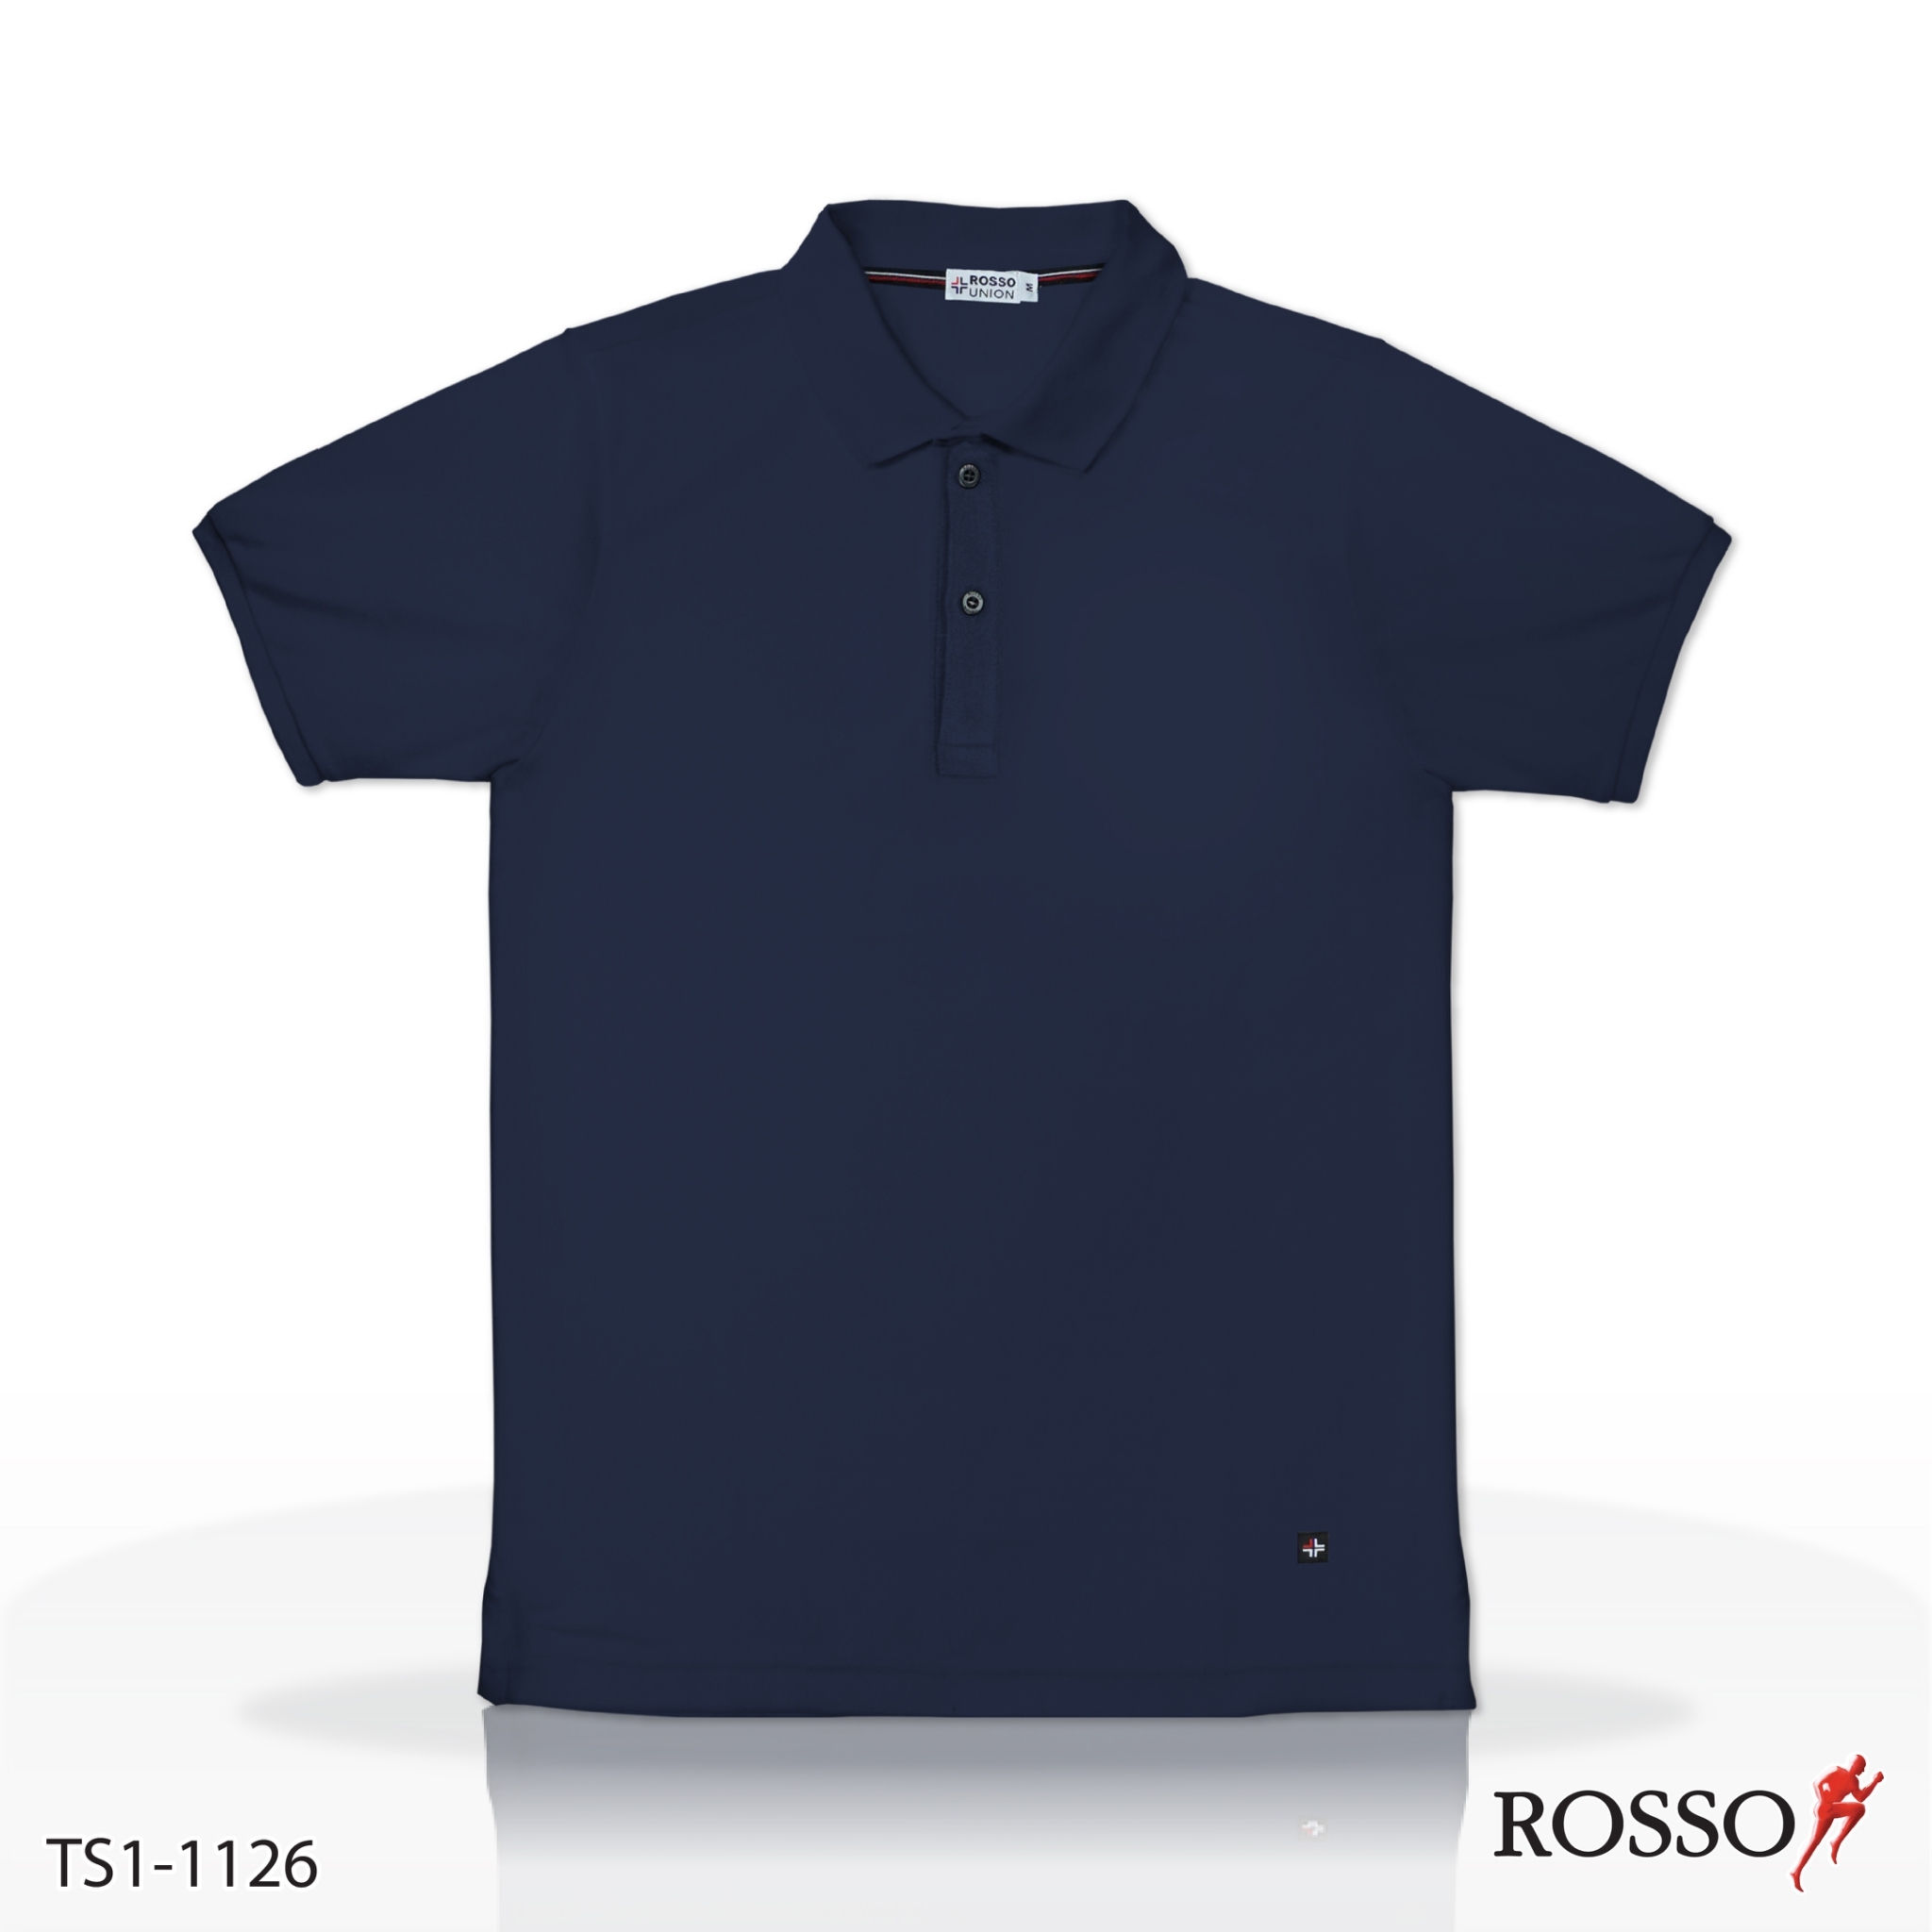 ROSSO เสื้อยืด POLO สีพื้น รุ่น TS1-1126 (1ตัว/แพค)